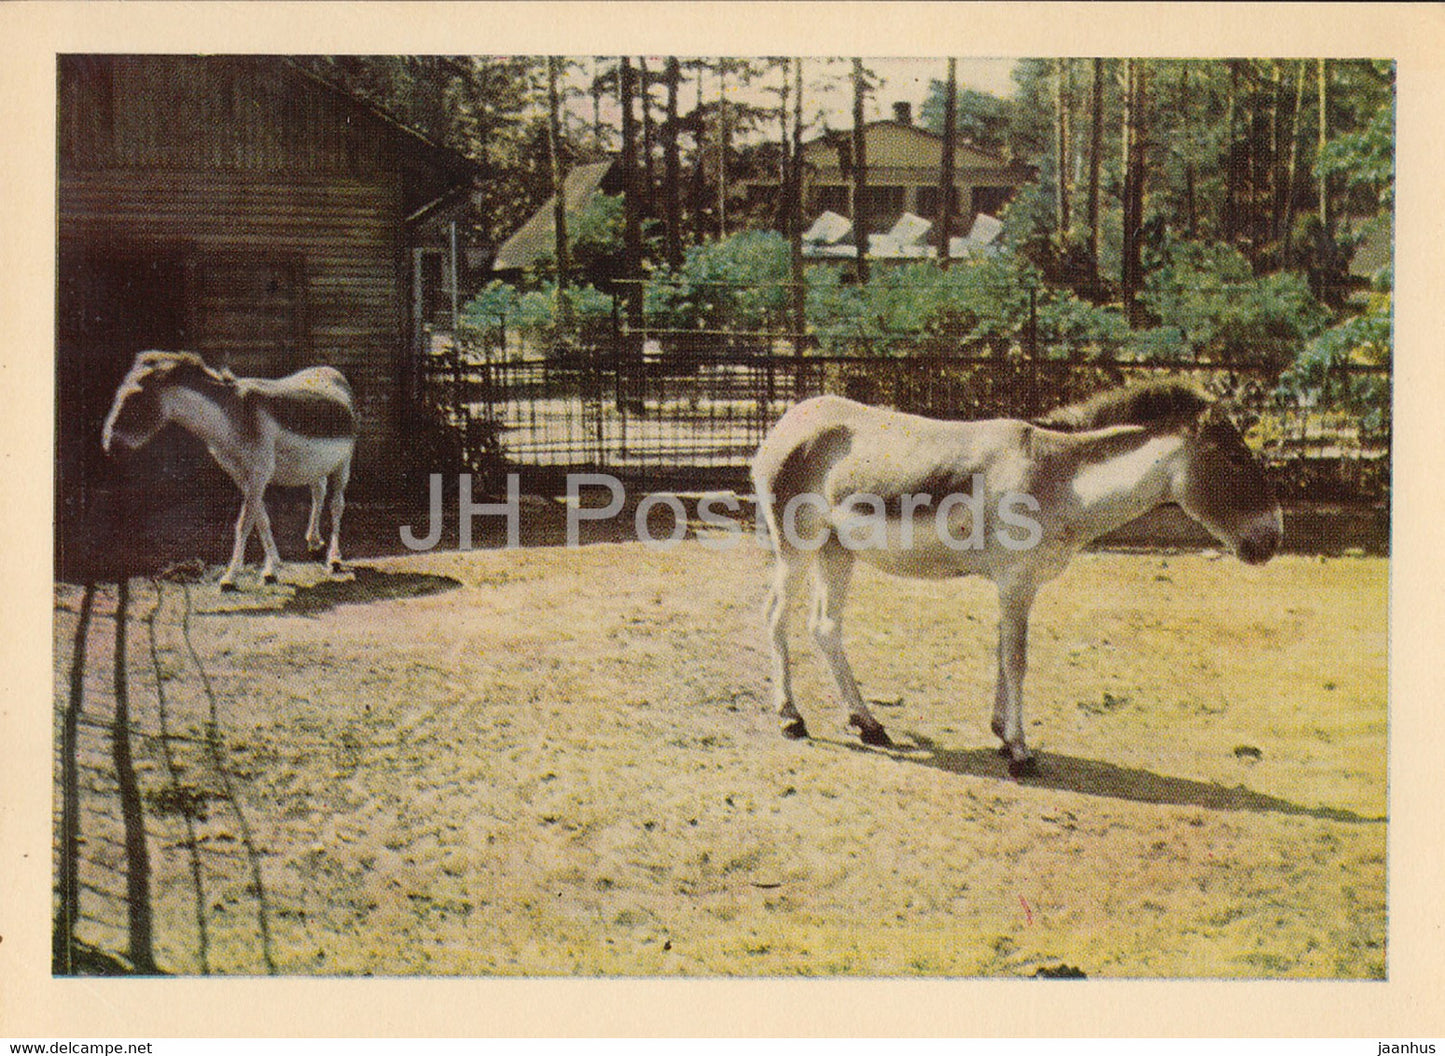 Riga Zoo - Kiang - Equus kiang - Latvia USSR - unused - JH Postcards